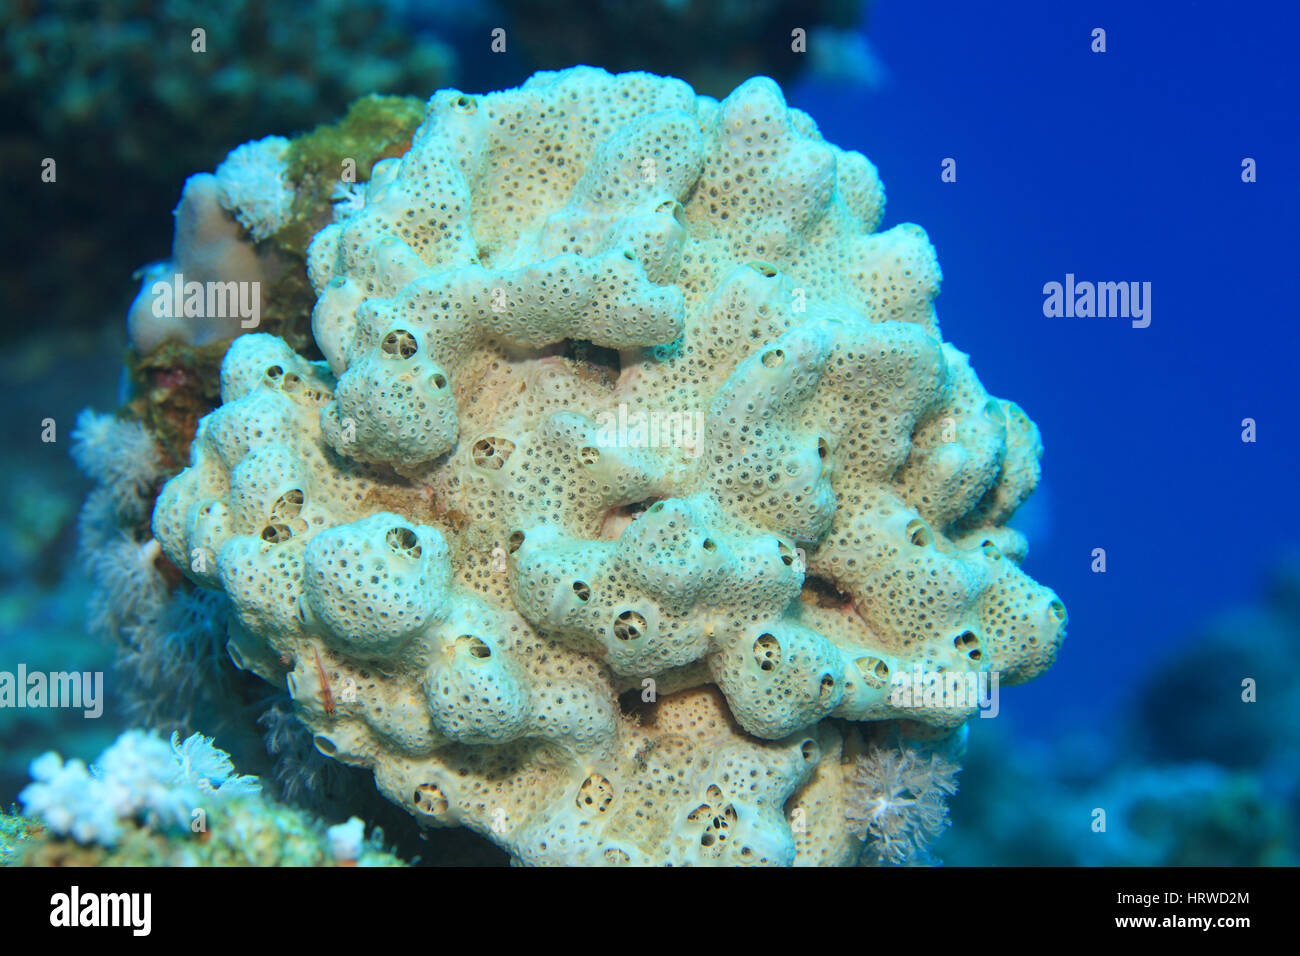 Sea sponge underwater in the tropical coral reef Stock Photo